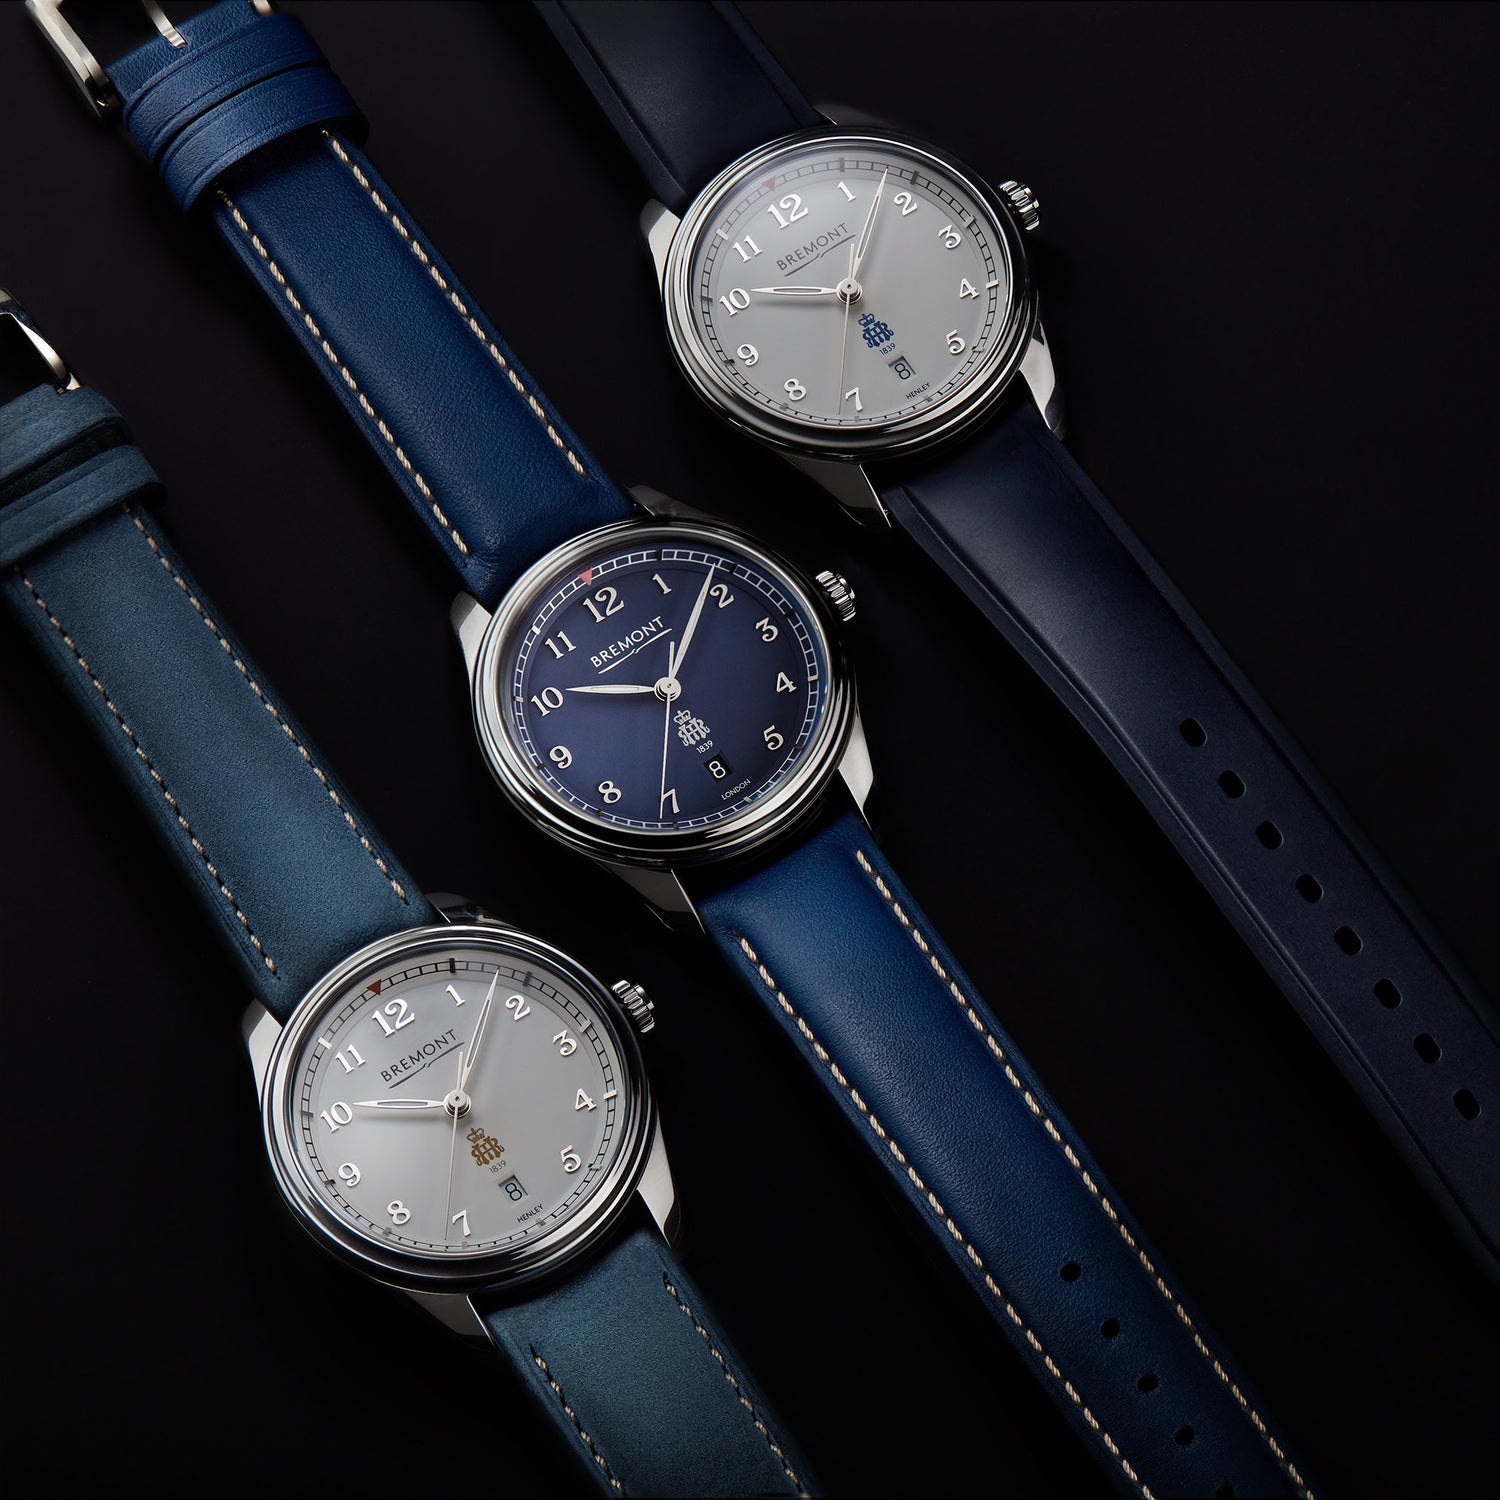 Bremont Chronometers Special Edition Henley Royal Regatta Winner's Timepiece